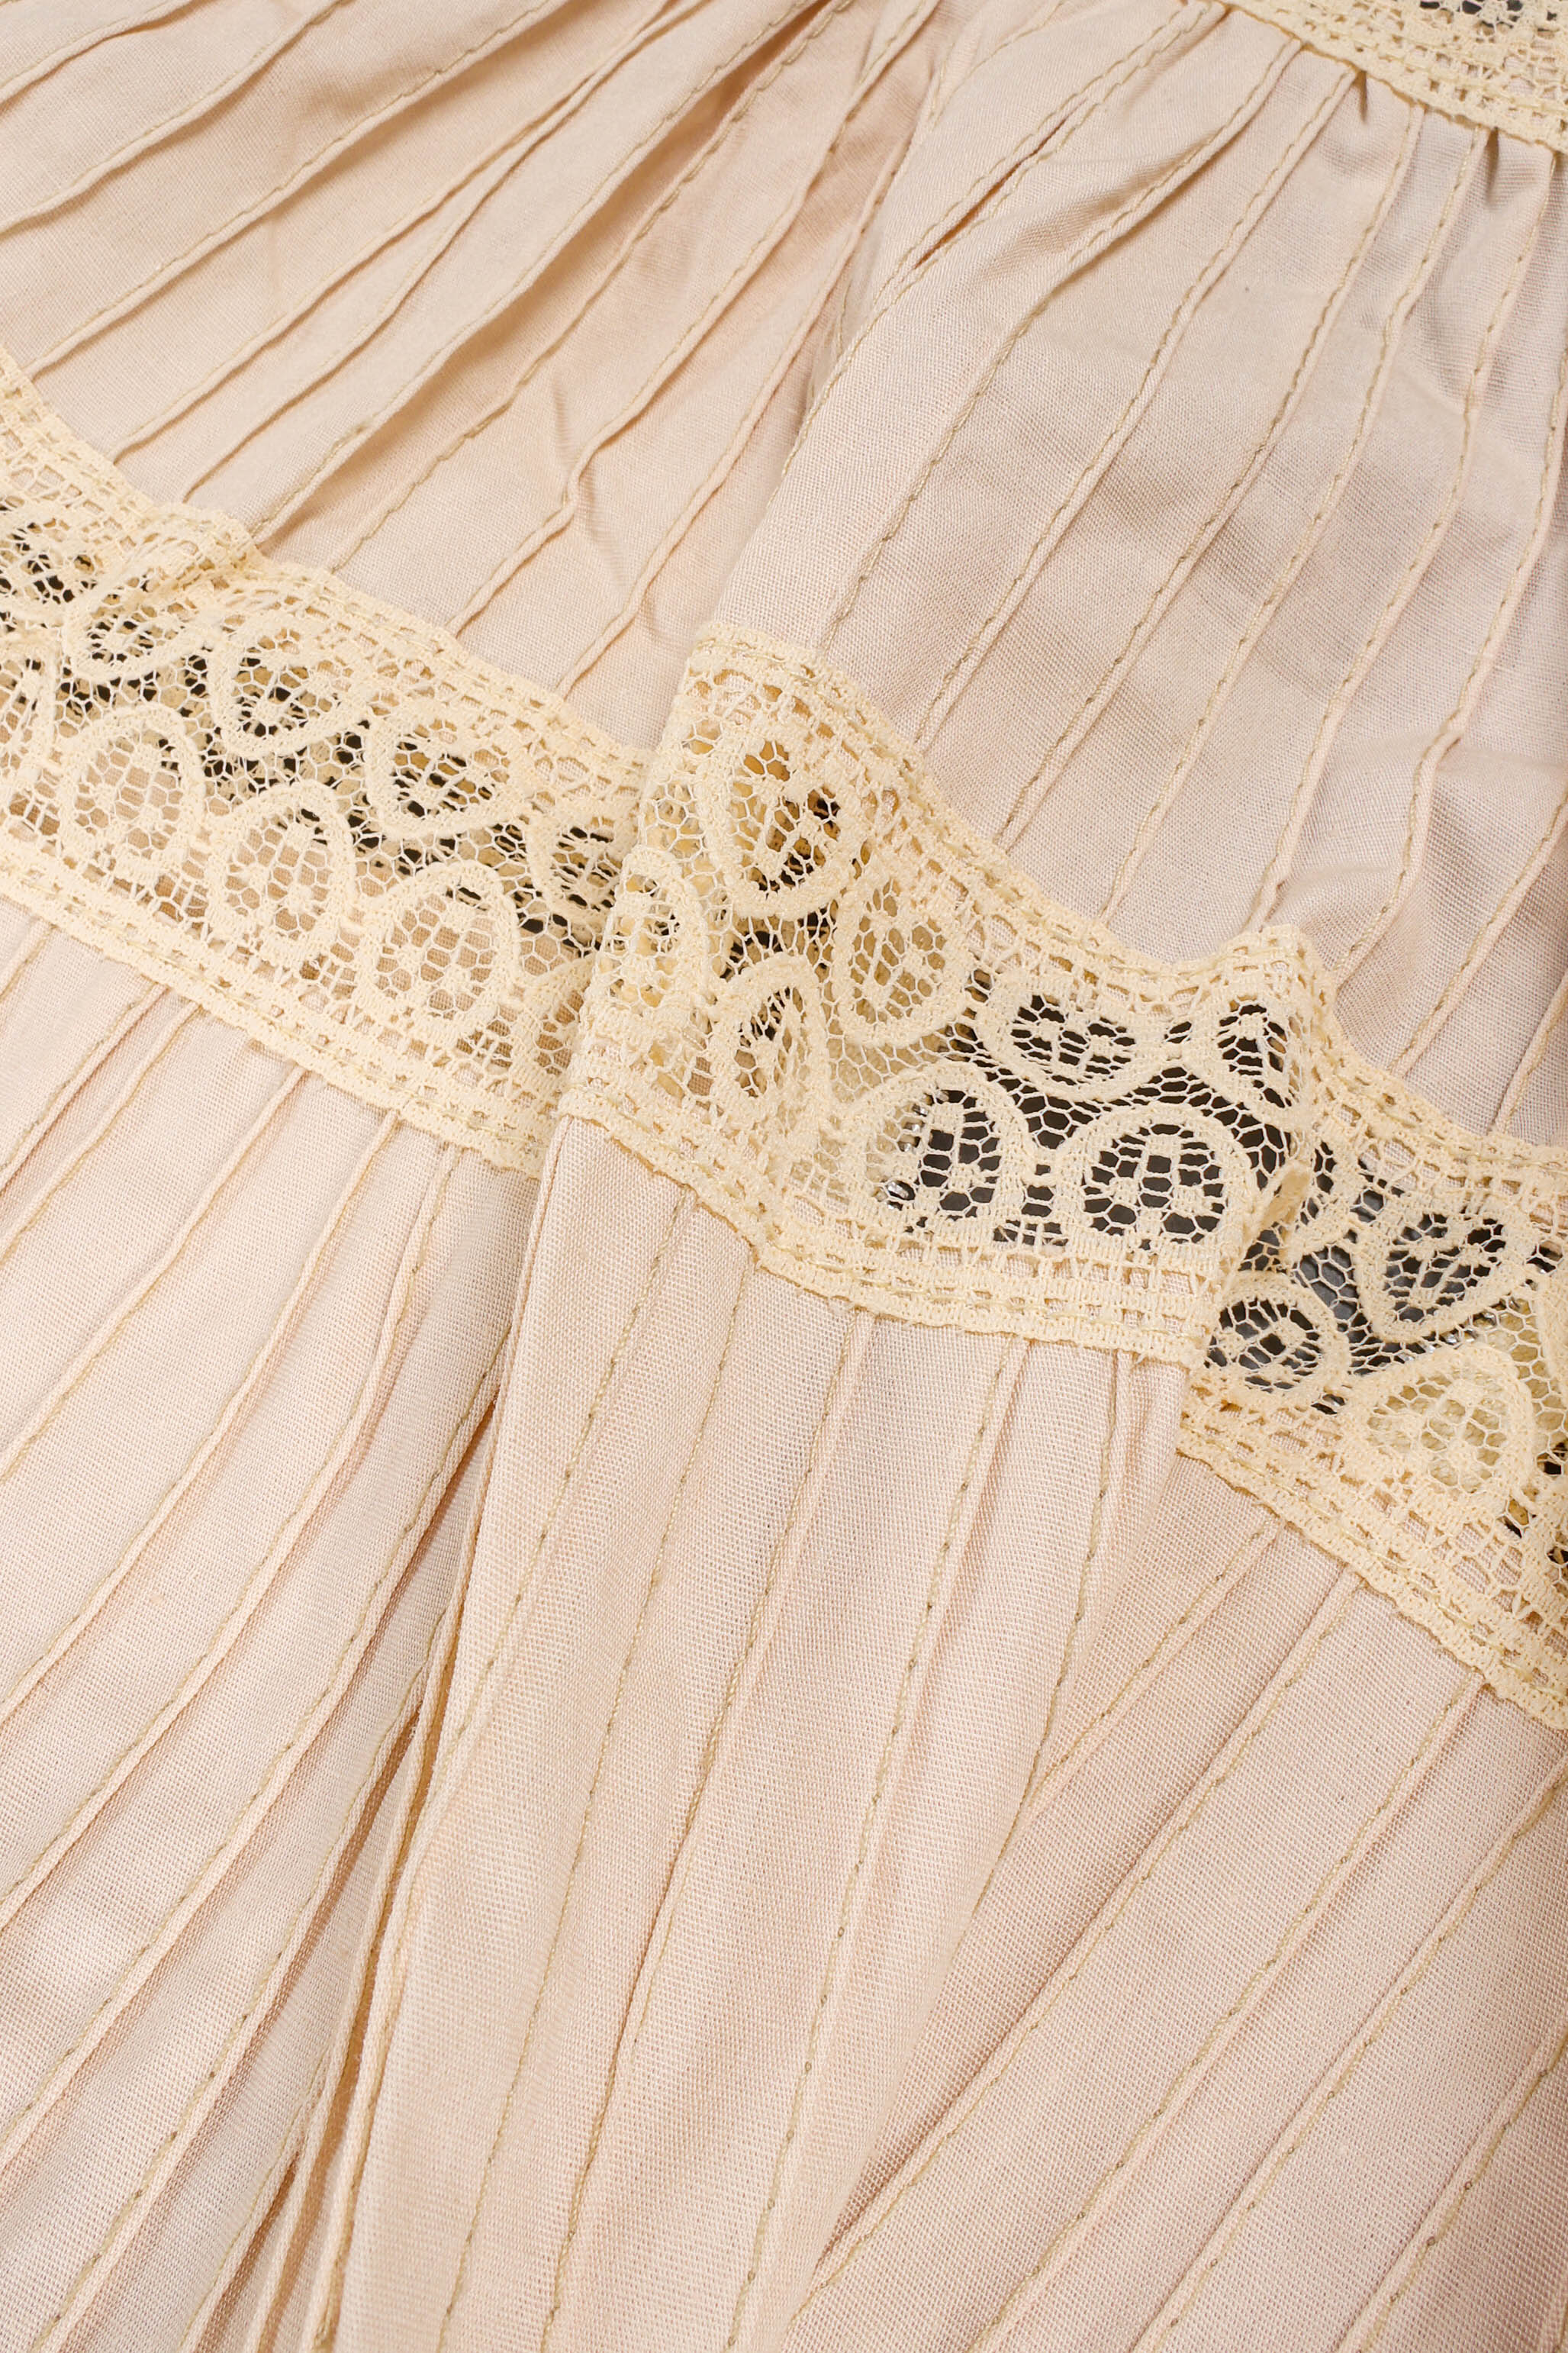 Vintage Mexican Lace Pintuck Prairie Dress skirt detail @ Recess Los Angeles